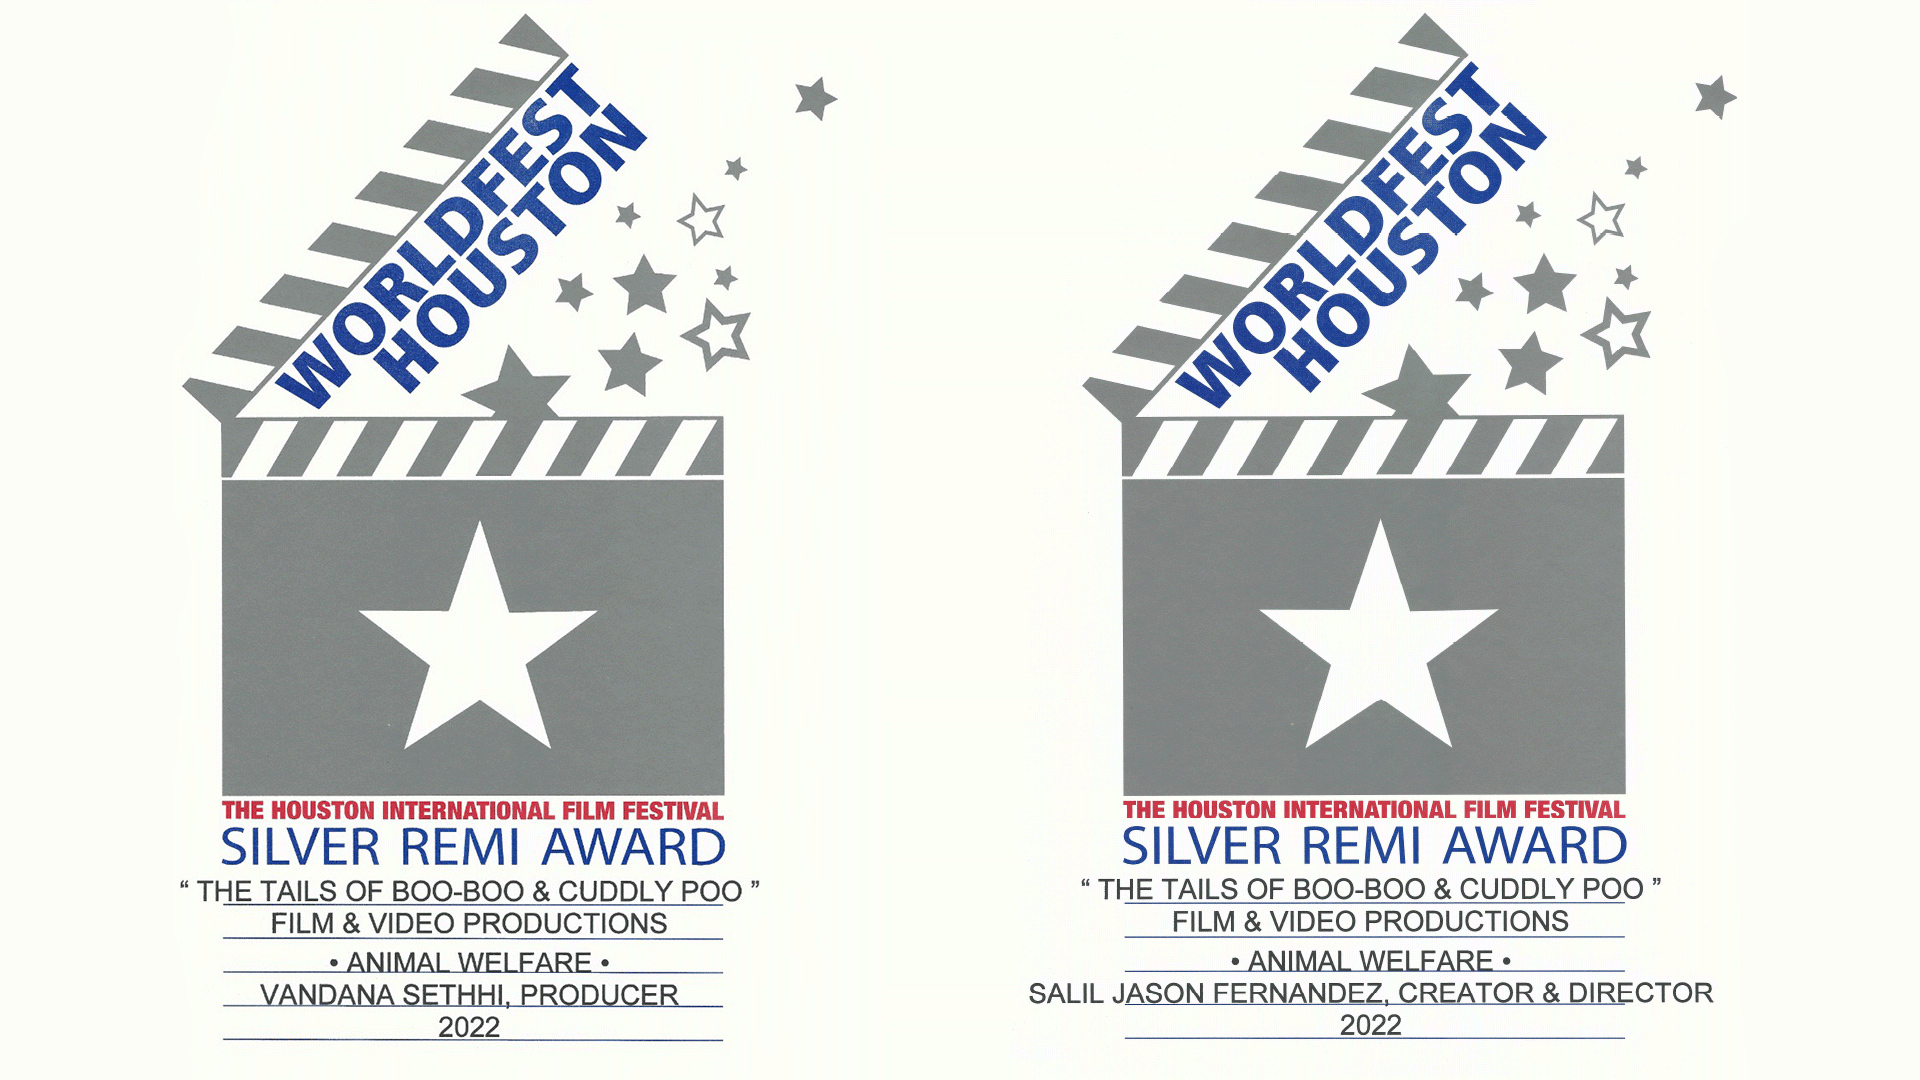 Earth Films gets Silver Remi Award at The Houston International Film Festival